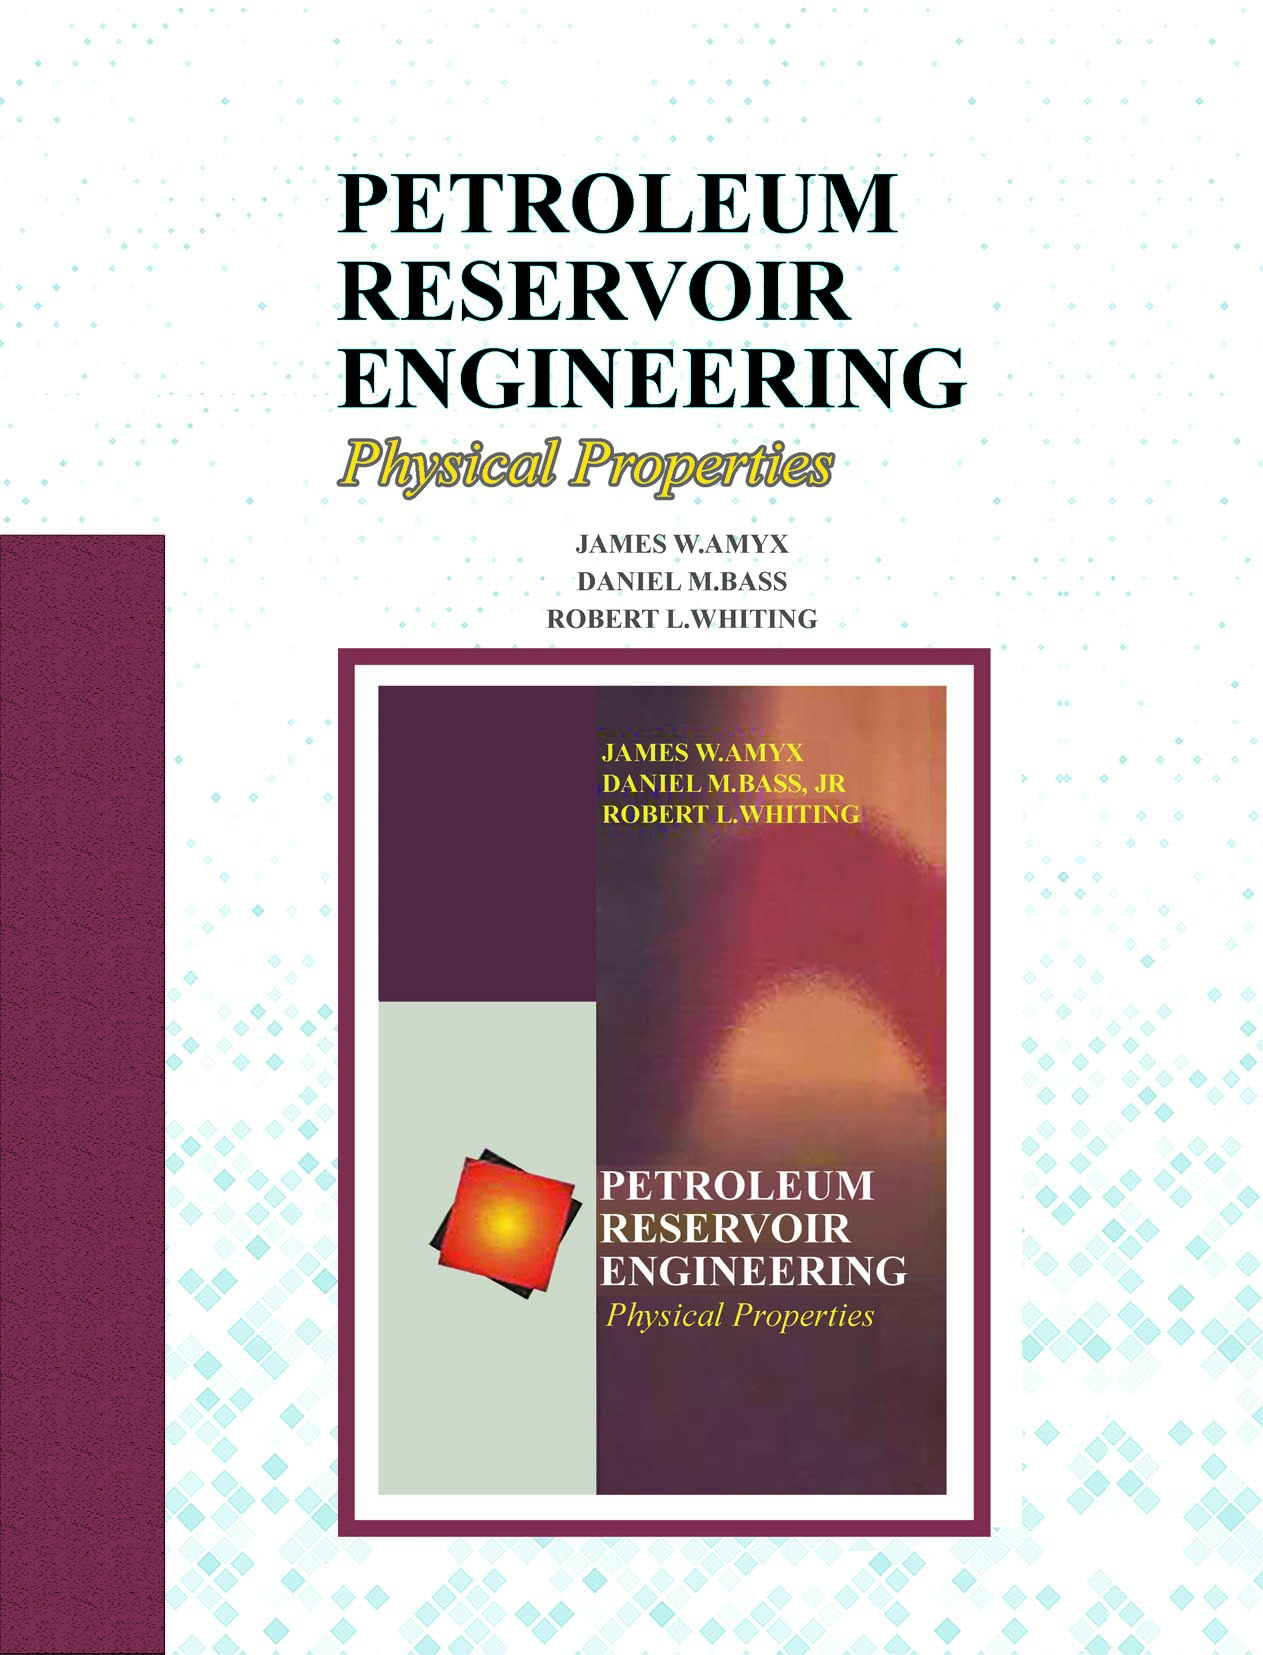 PETROLEUM RESERVOIR ENGINEERING - Physical Properties